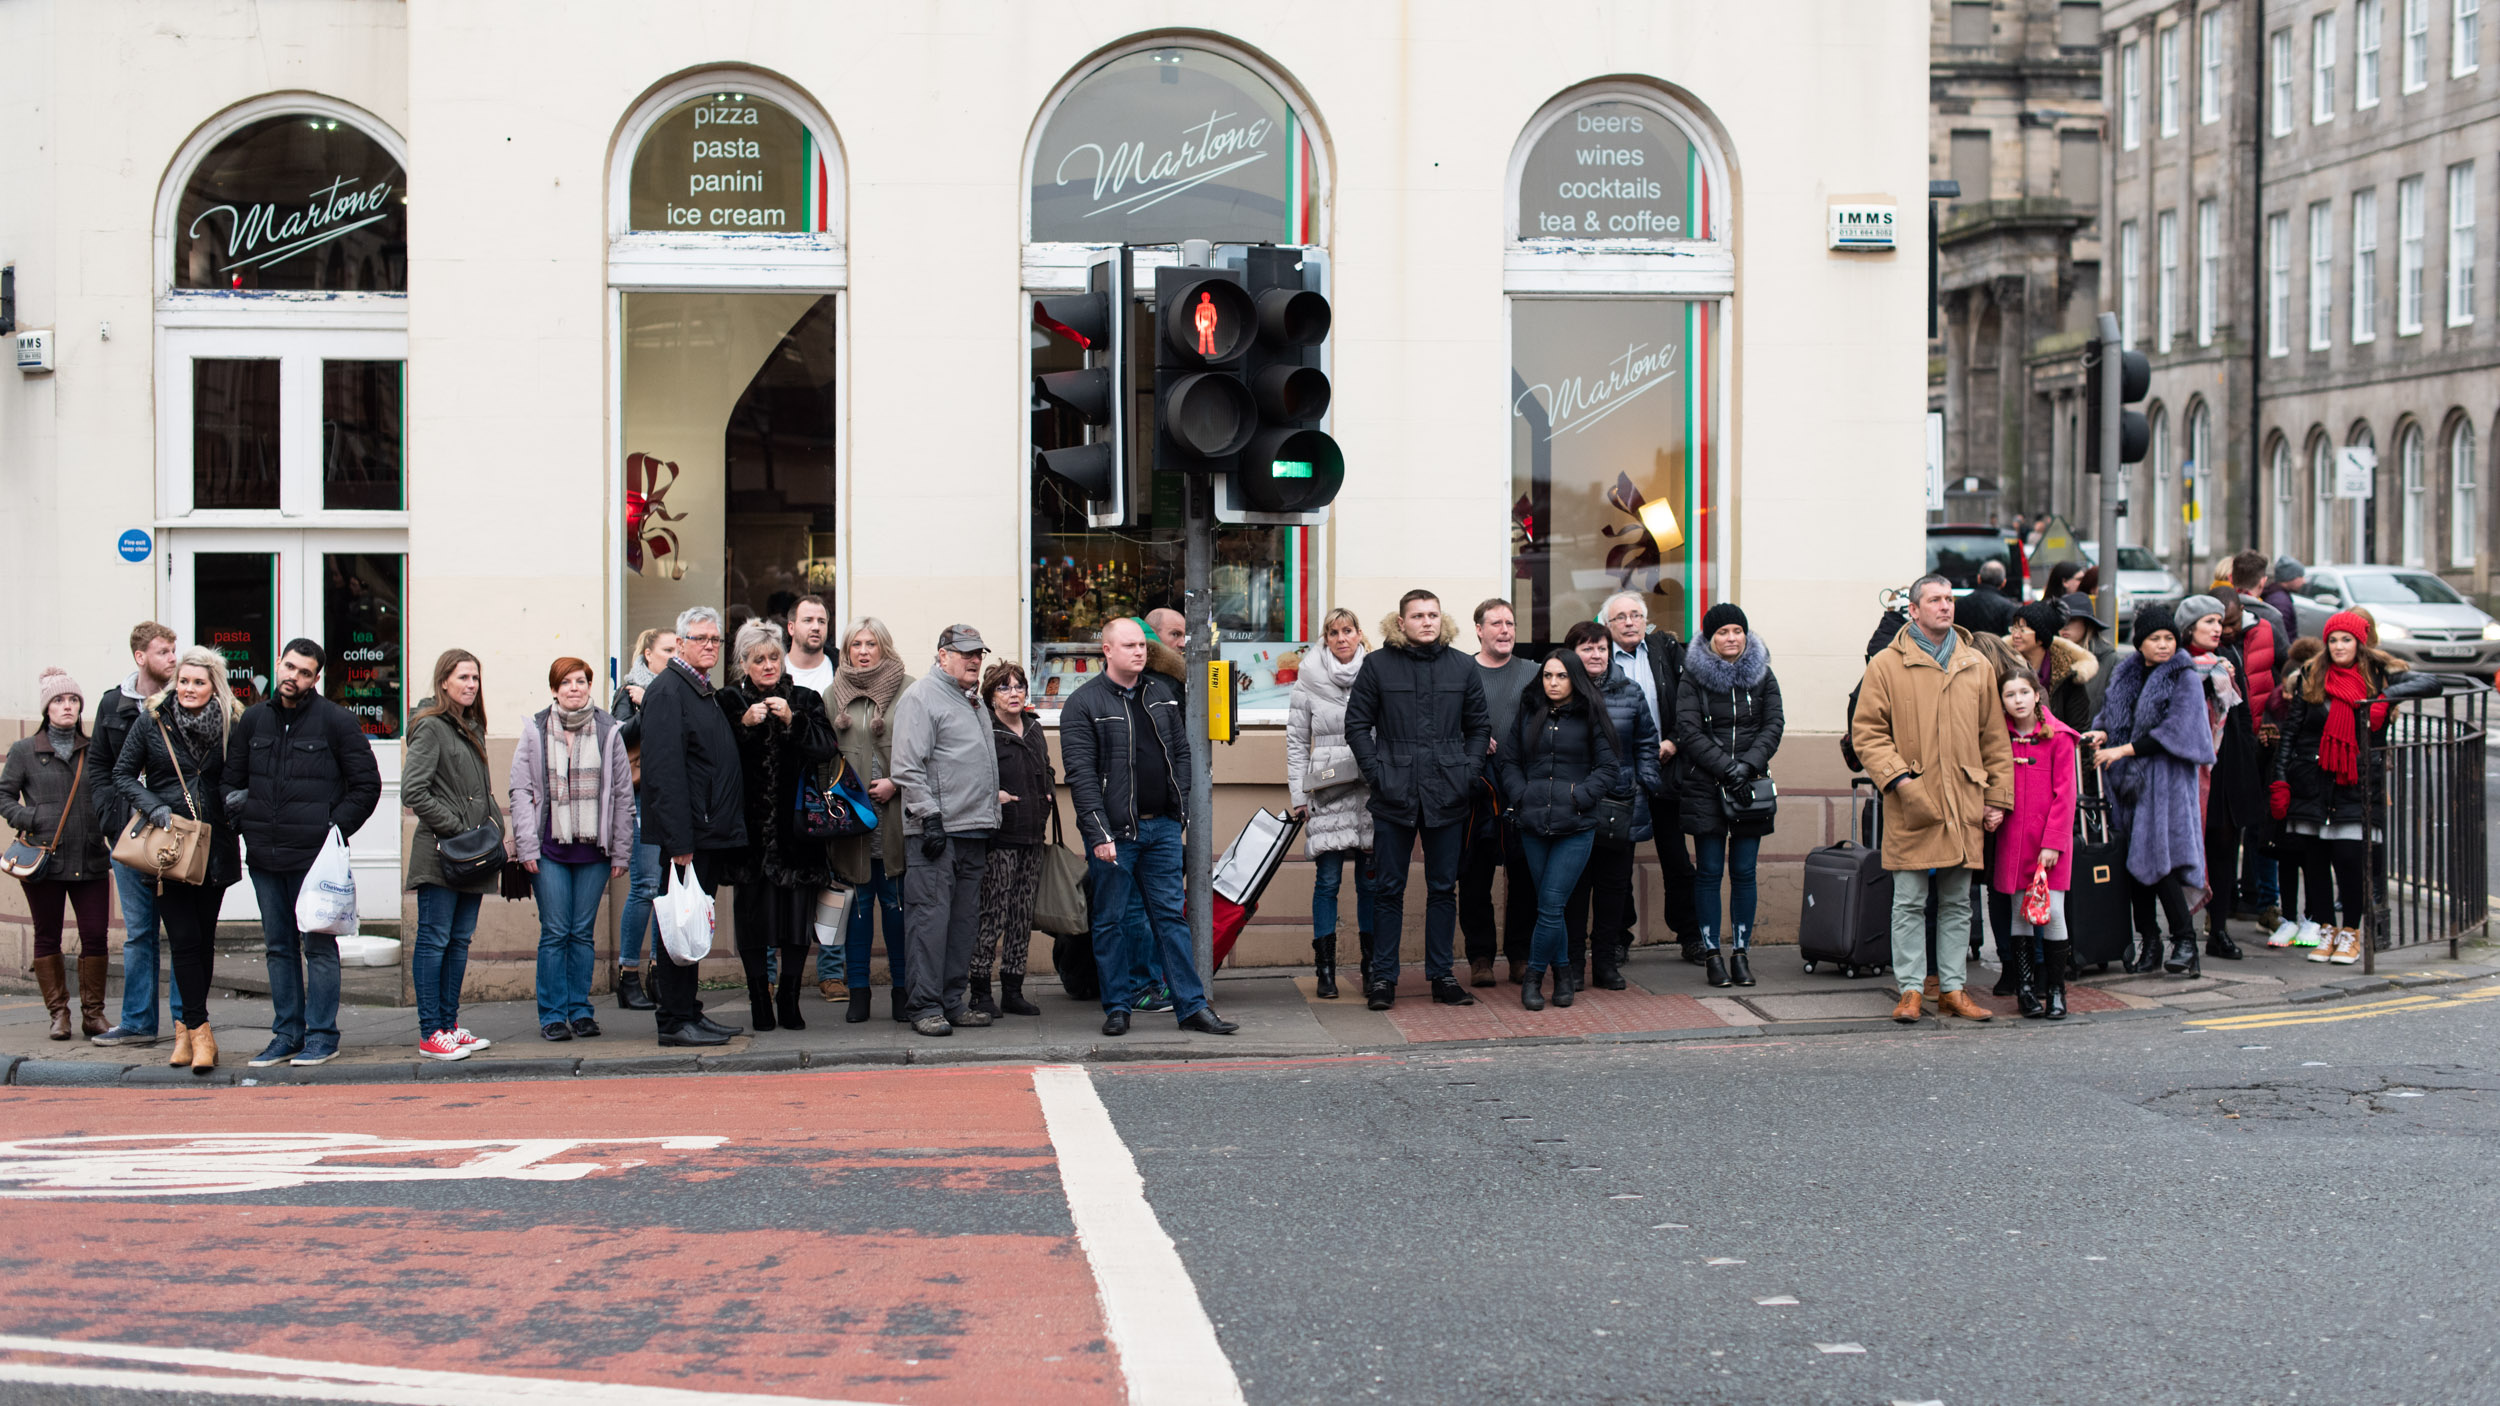 A CROWD OF PEOPLE WAIT A CROSSING IN EDINBURGH SCOTLAND